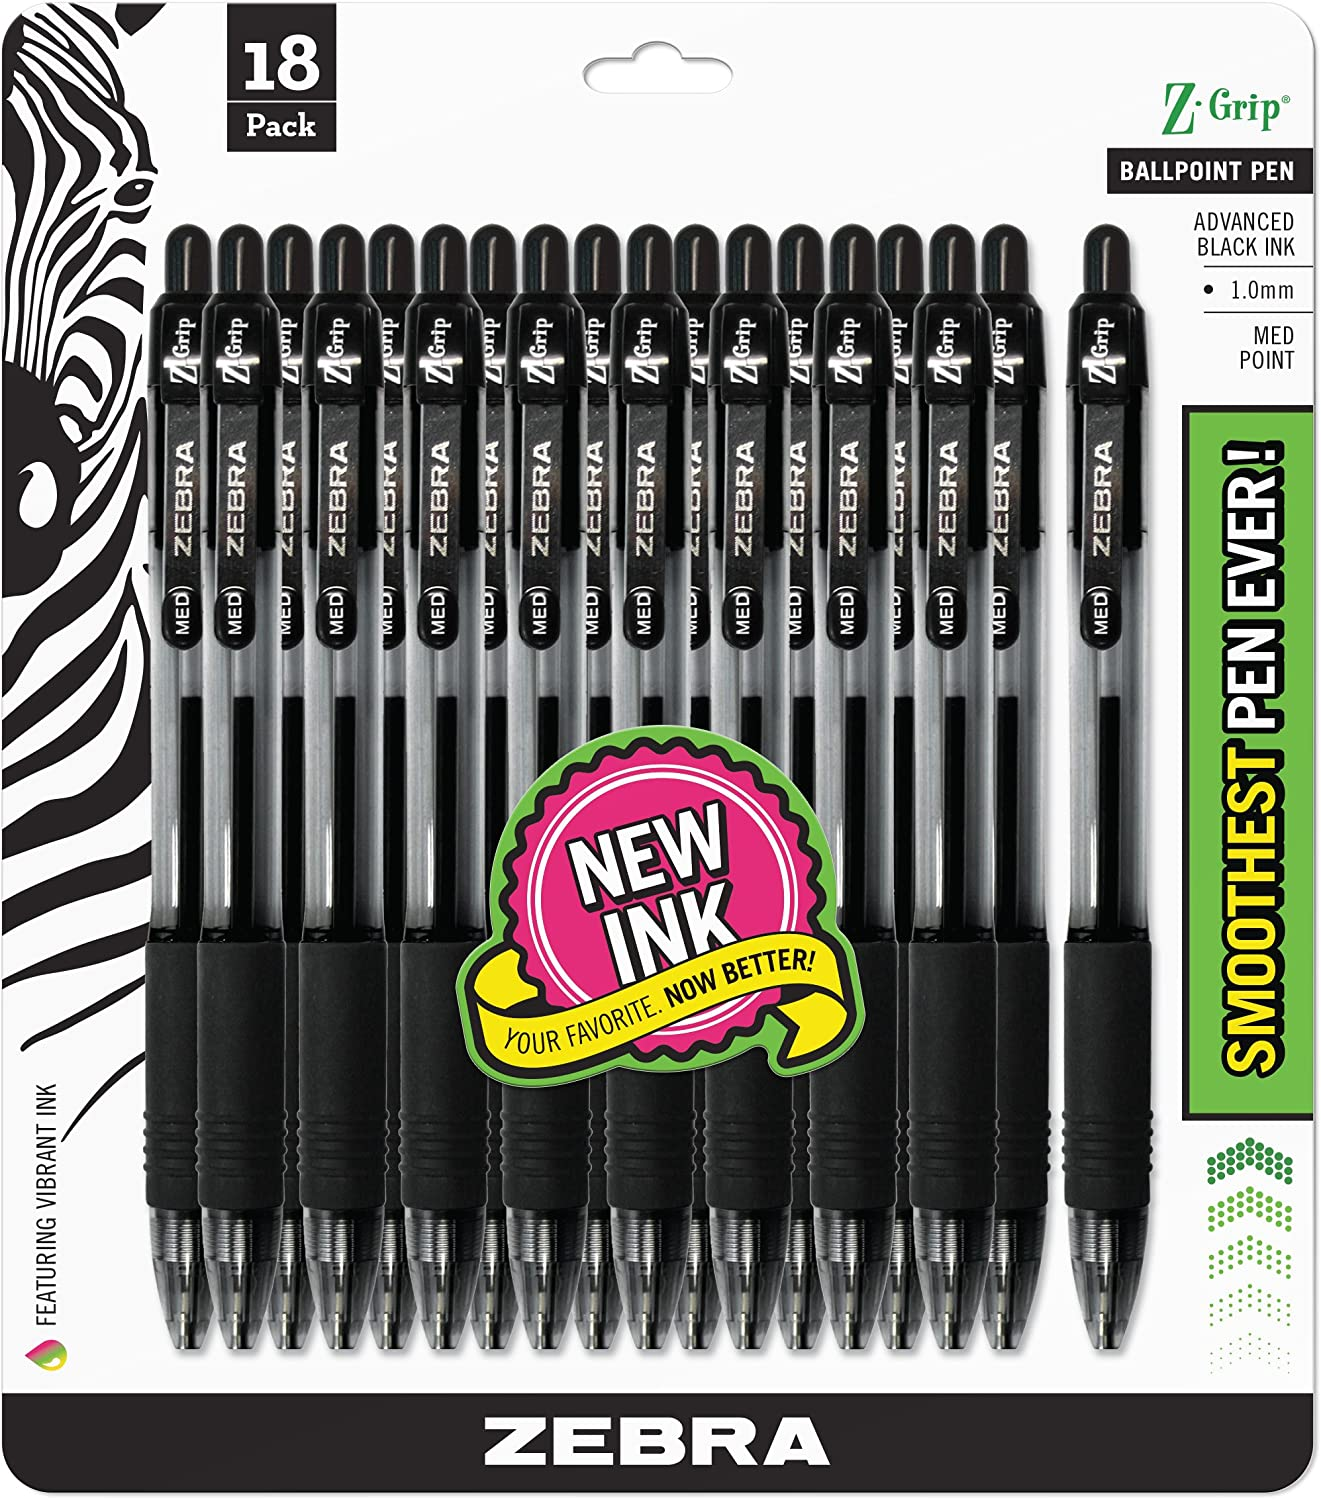 18 Ct Zebra Pen Z-Grip Retractable Ballpoint Pen - Medium Point (Black Ink) $5.40